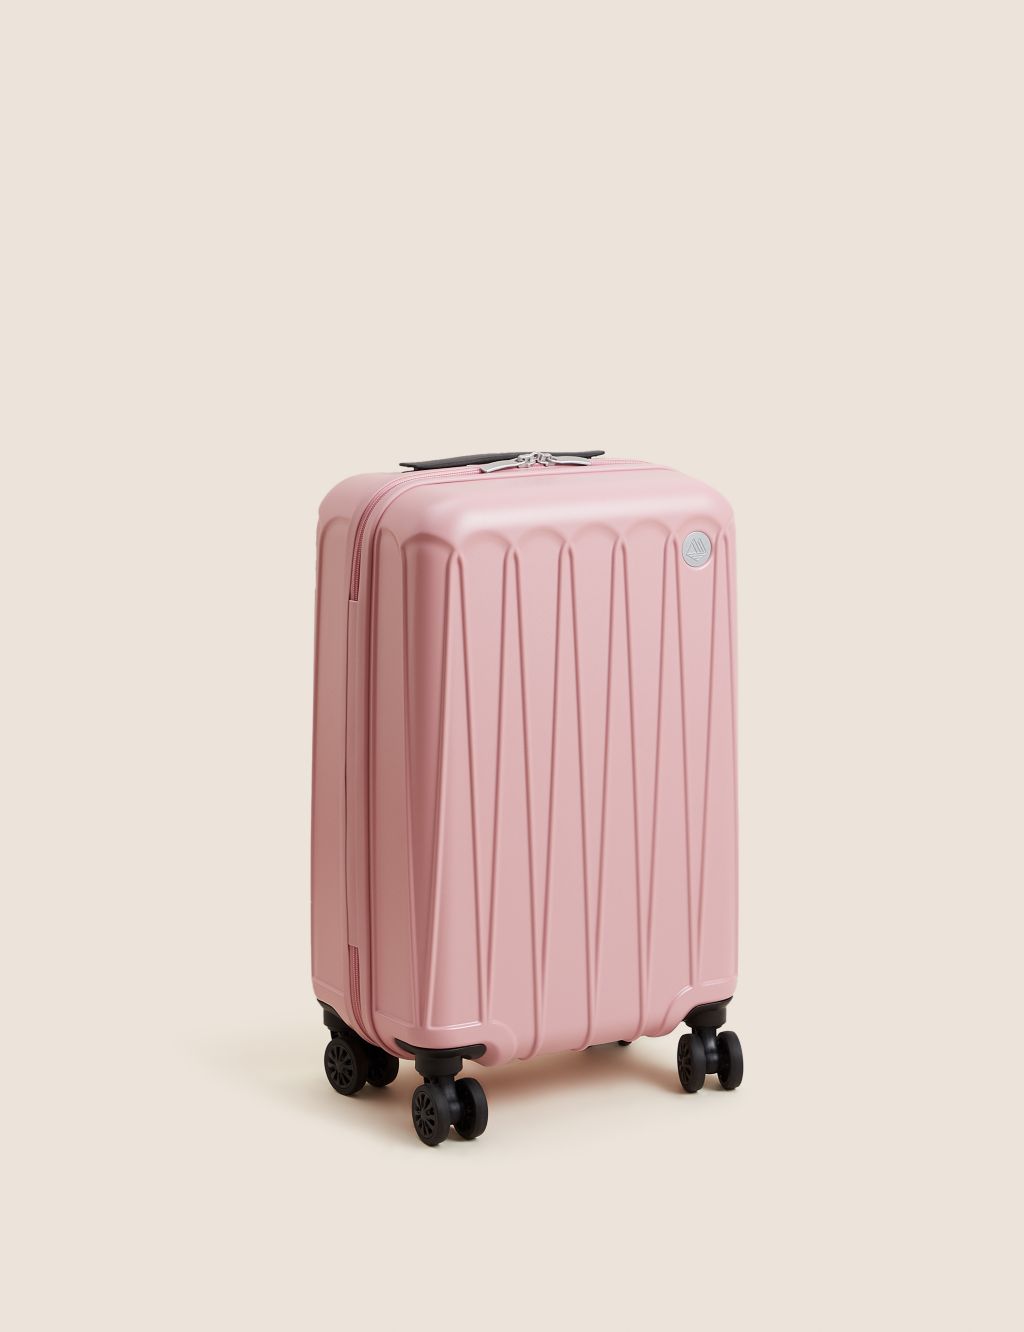 Amalfi 4 Wheel Hard Shell Cabin Suitcase image 1